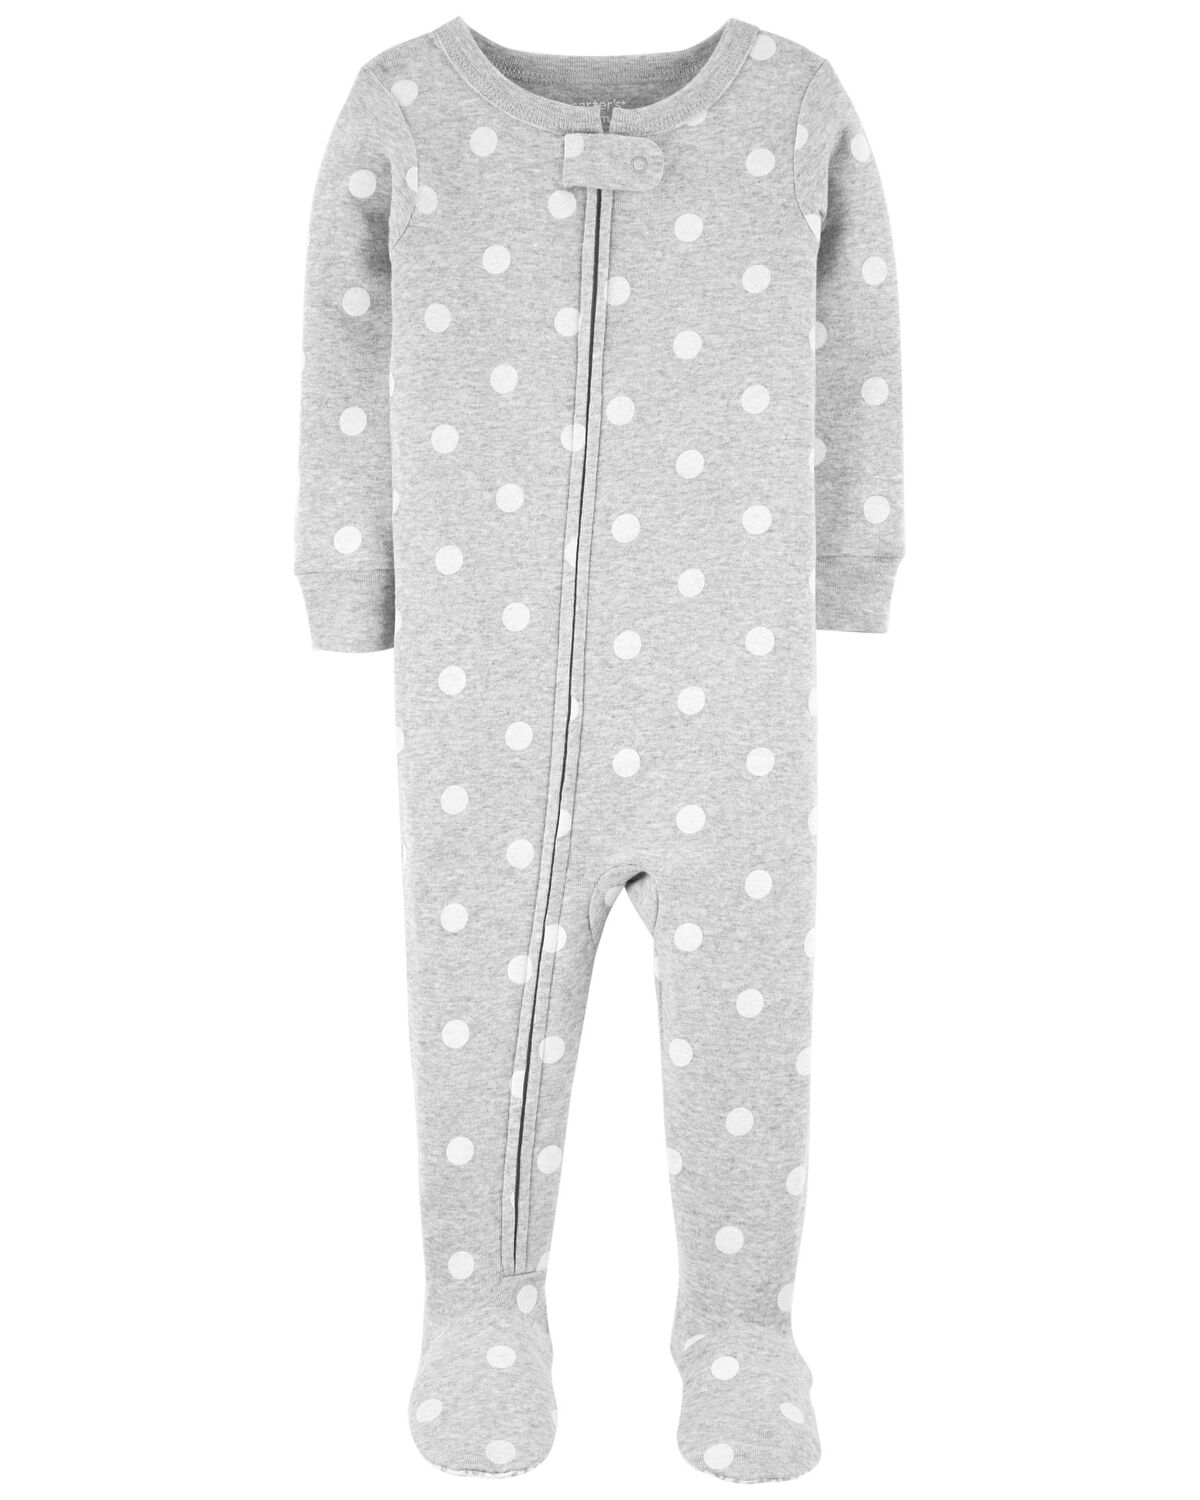 Toddler Polka Dot Cotton 1-Piece Pajama